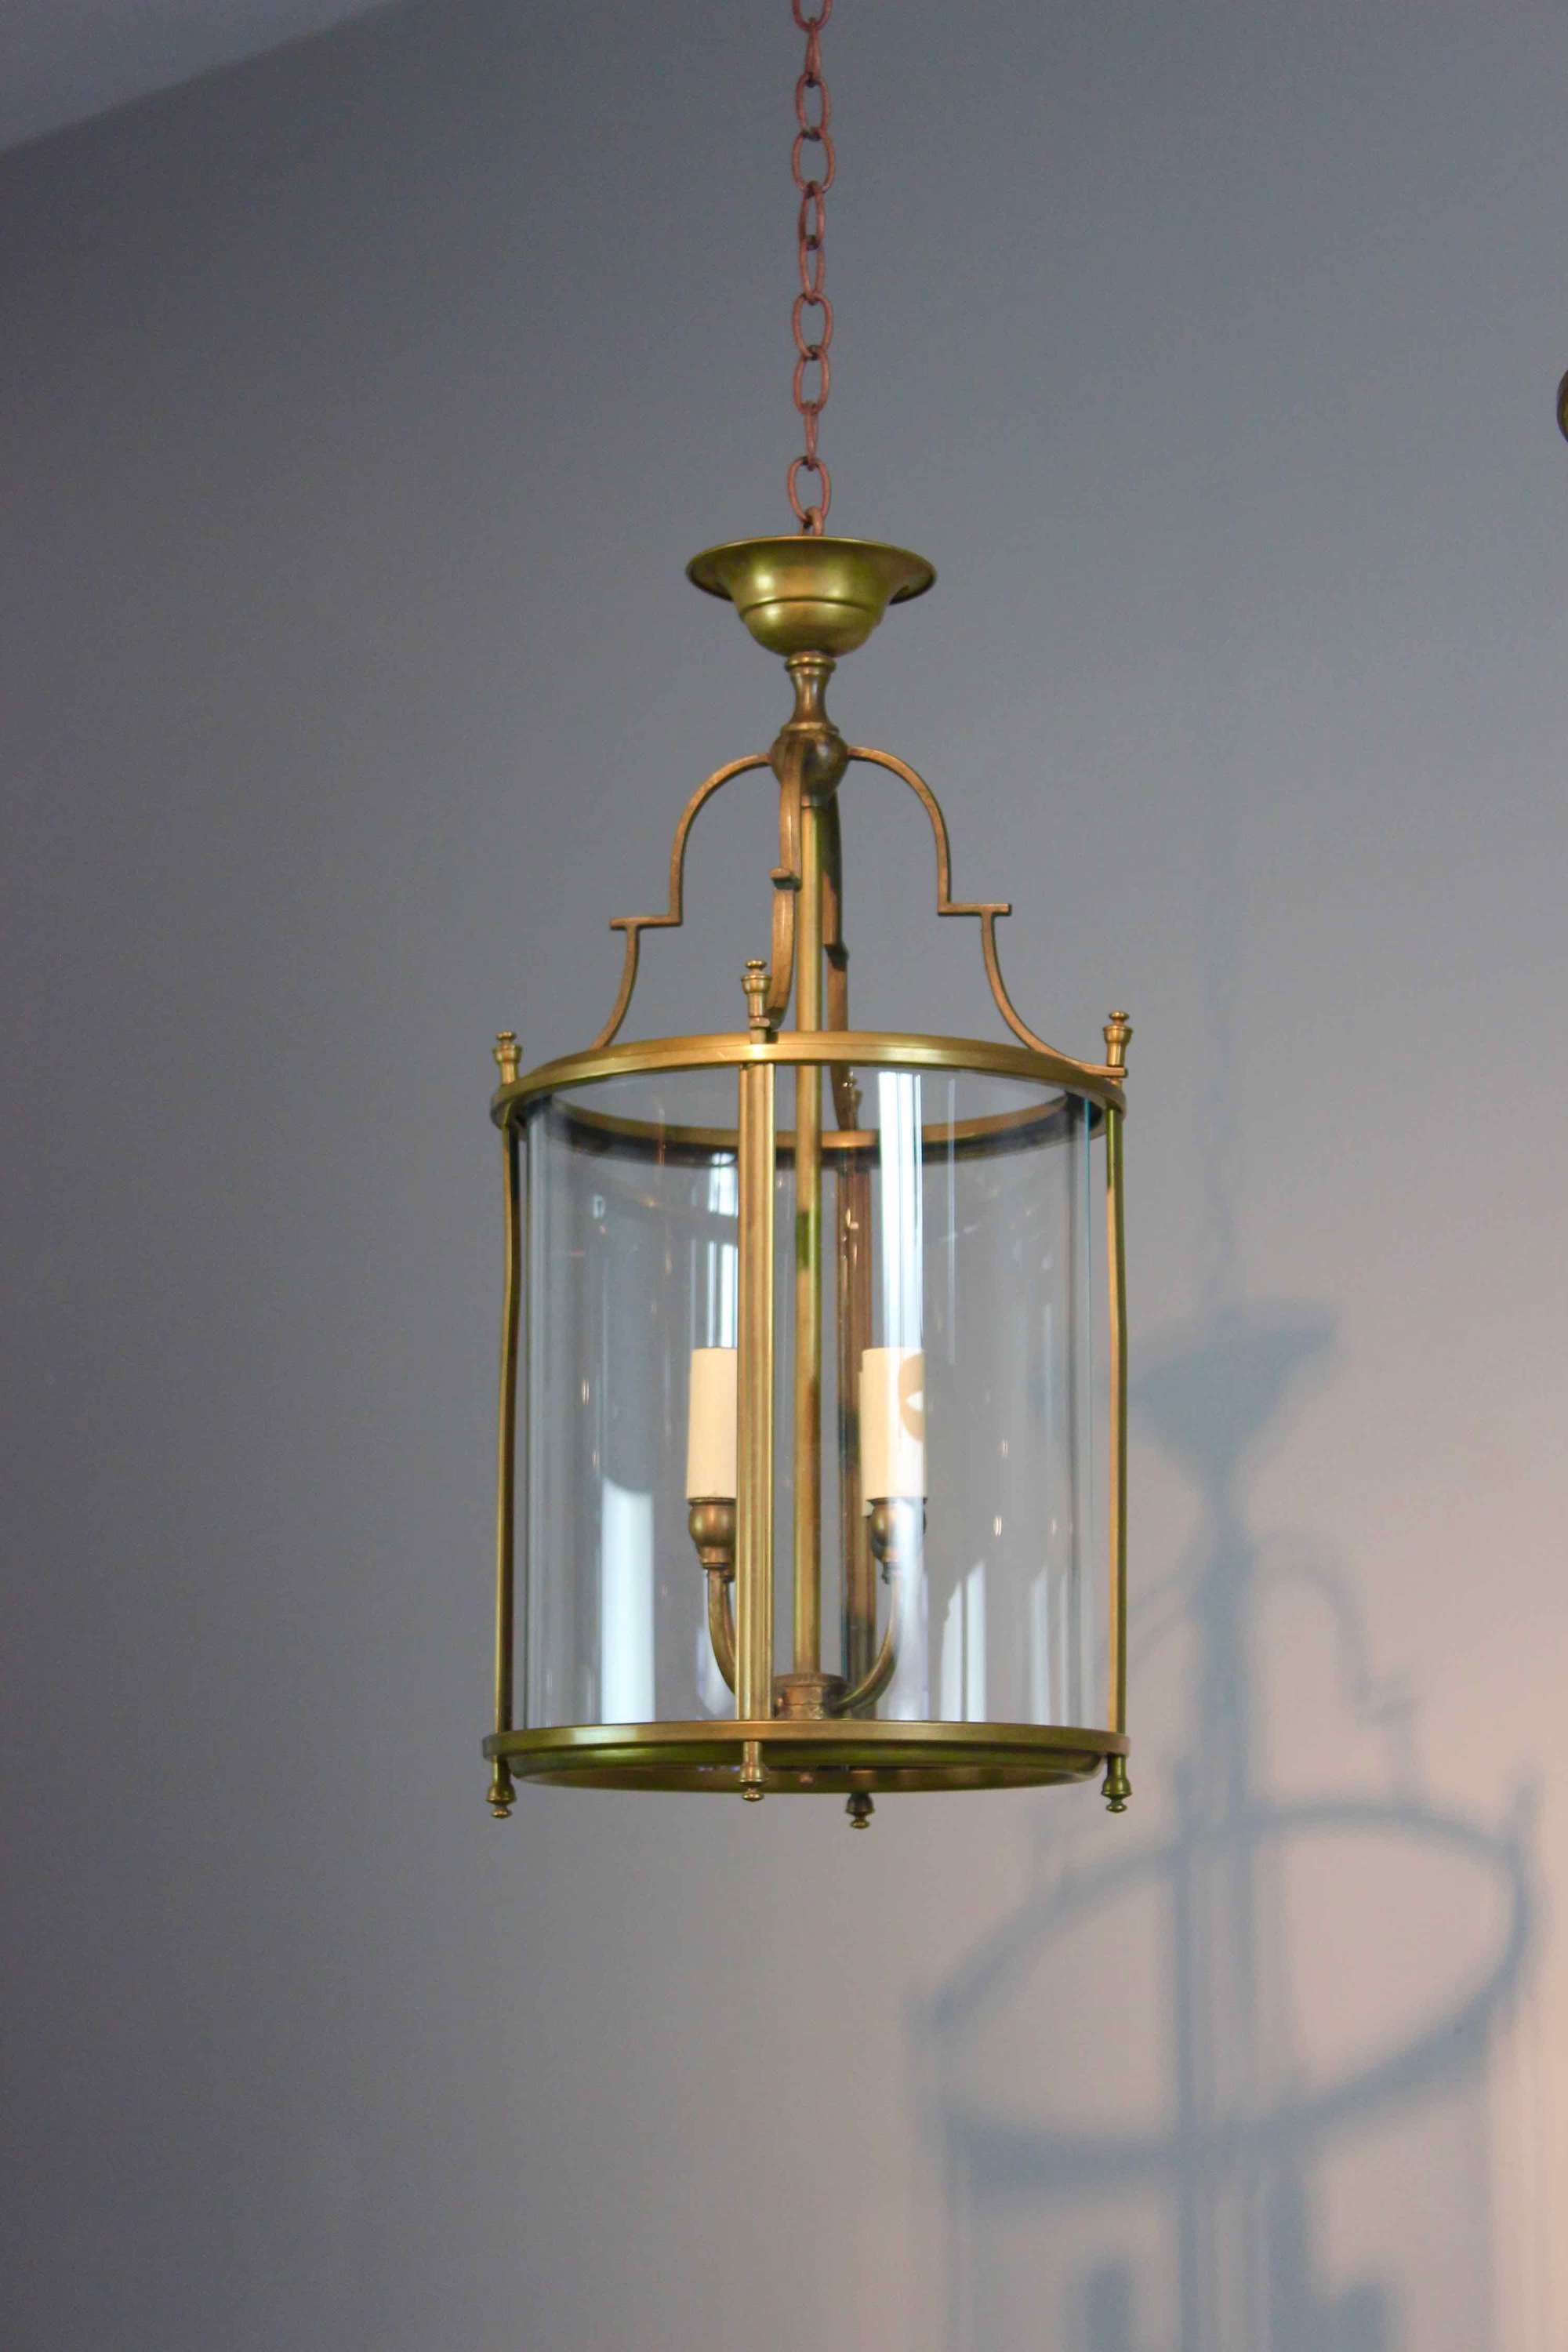 Single circular brass hall lantern of good proportions